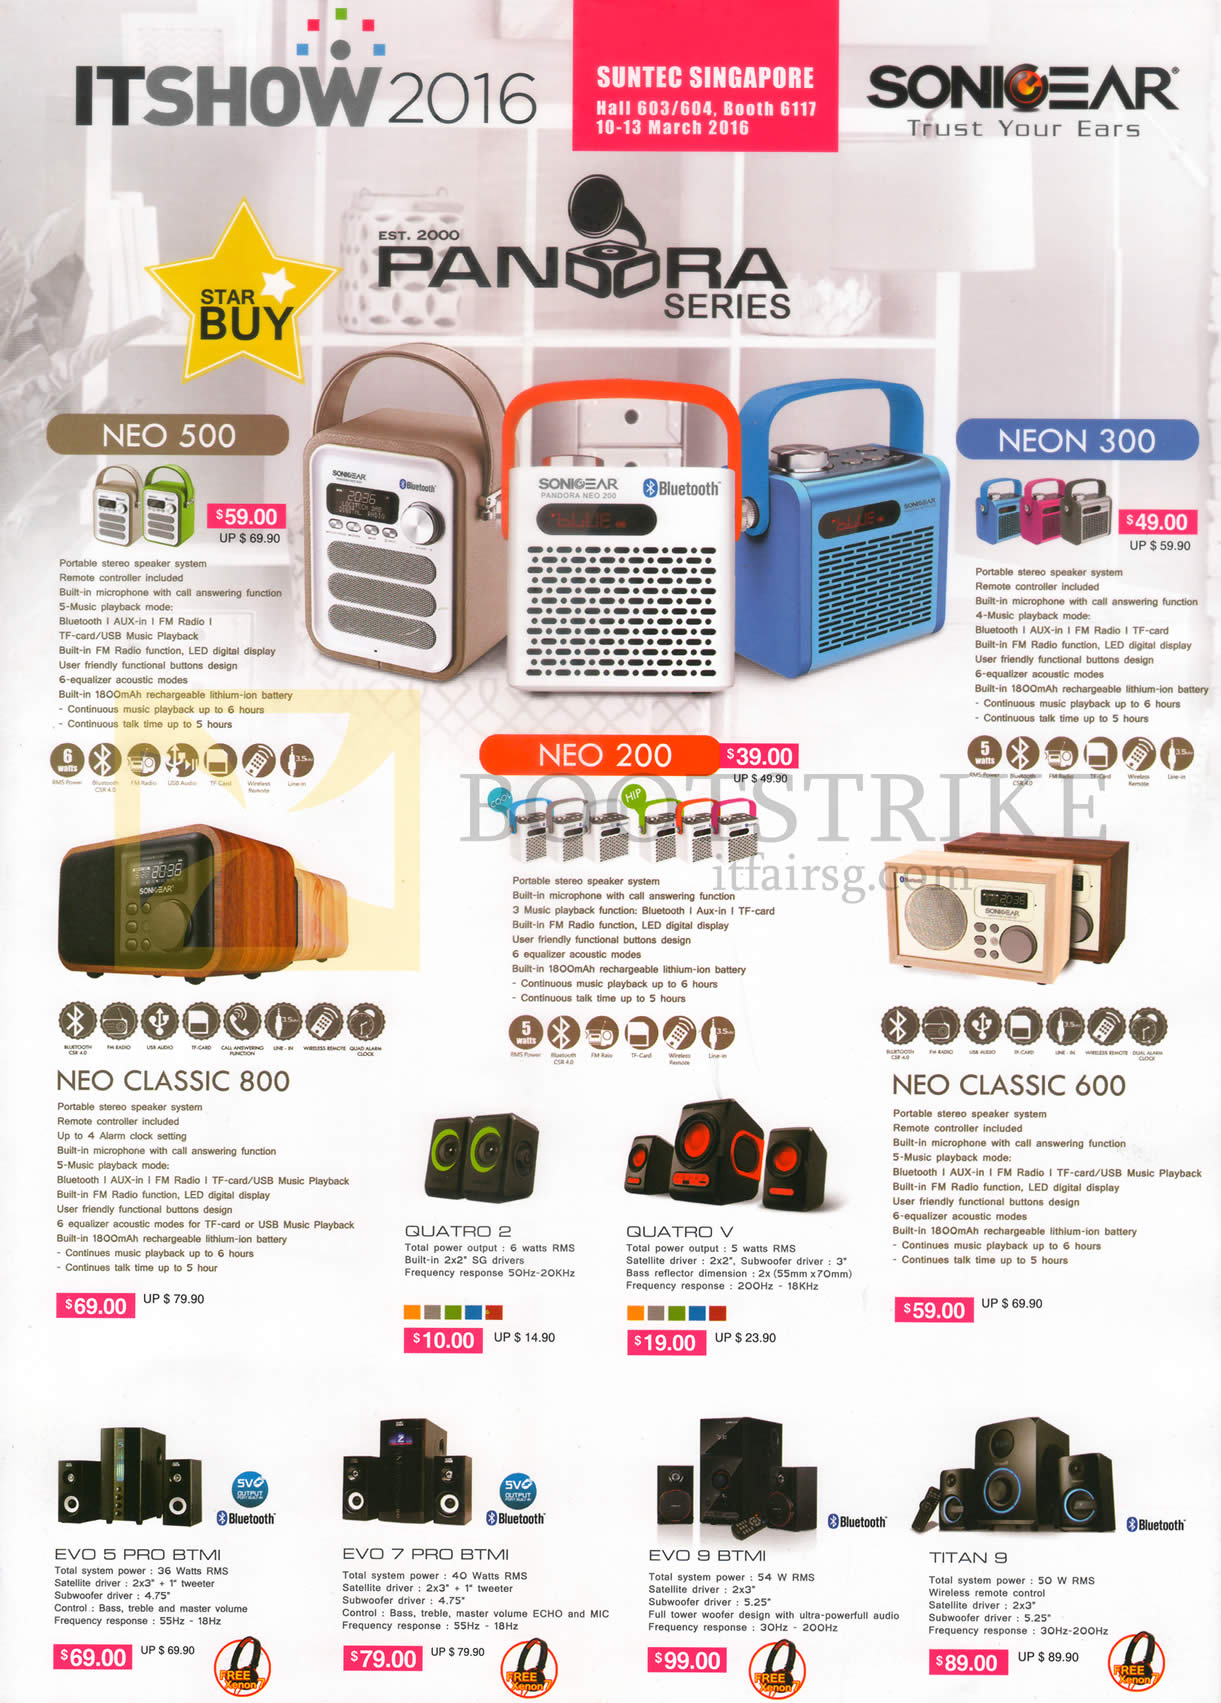 IT SHOW 2016 price list image brochure of Sonicgear Speakers Pandora Series Neo 500, 200, Neon 300, Neo Classic 800, 600, Evo 5 Pro BTMI, 7 Pro, 9 BTMI, Titan 9